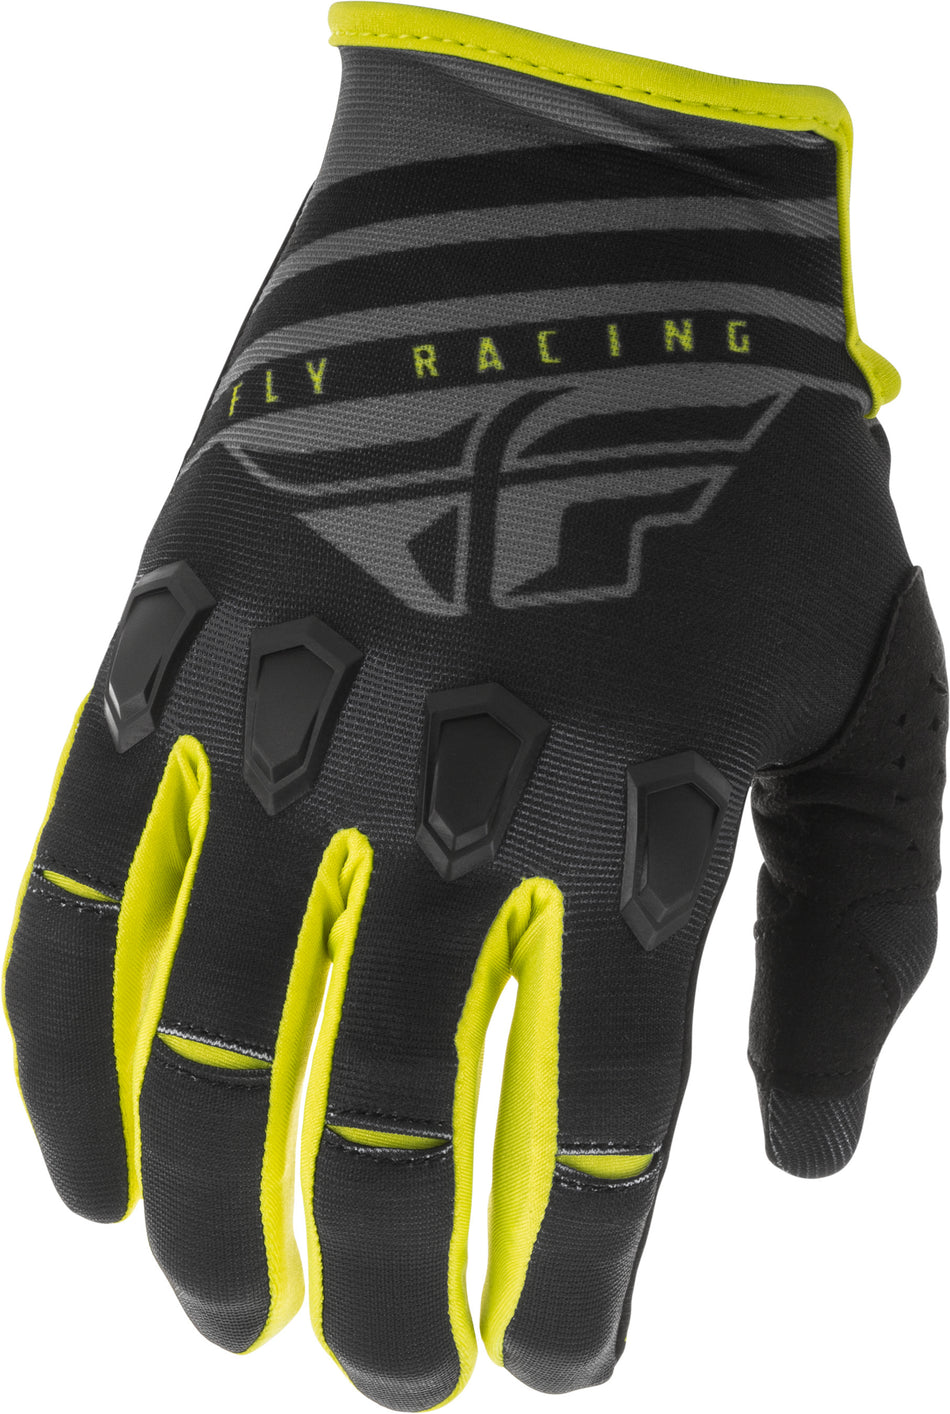 FLY RACING Kinetic K220 Gloves Black/Grey/Hi-Vis Sz 10 373-51510